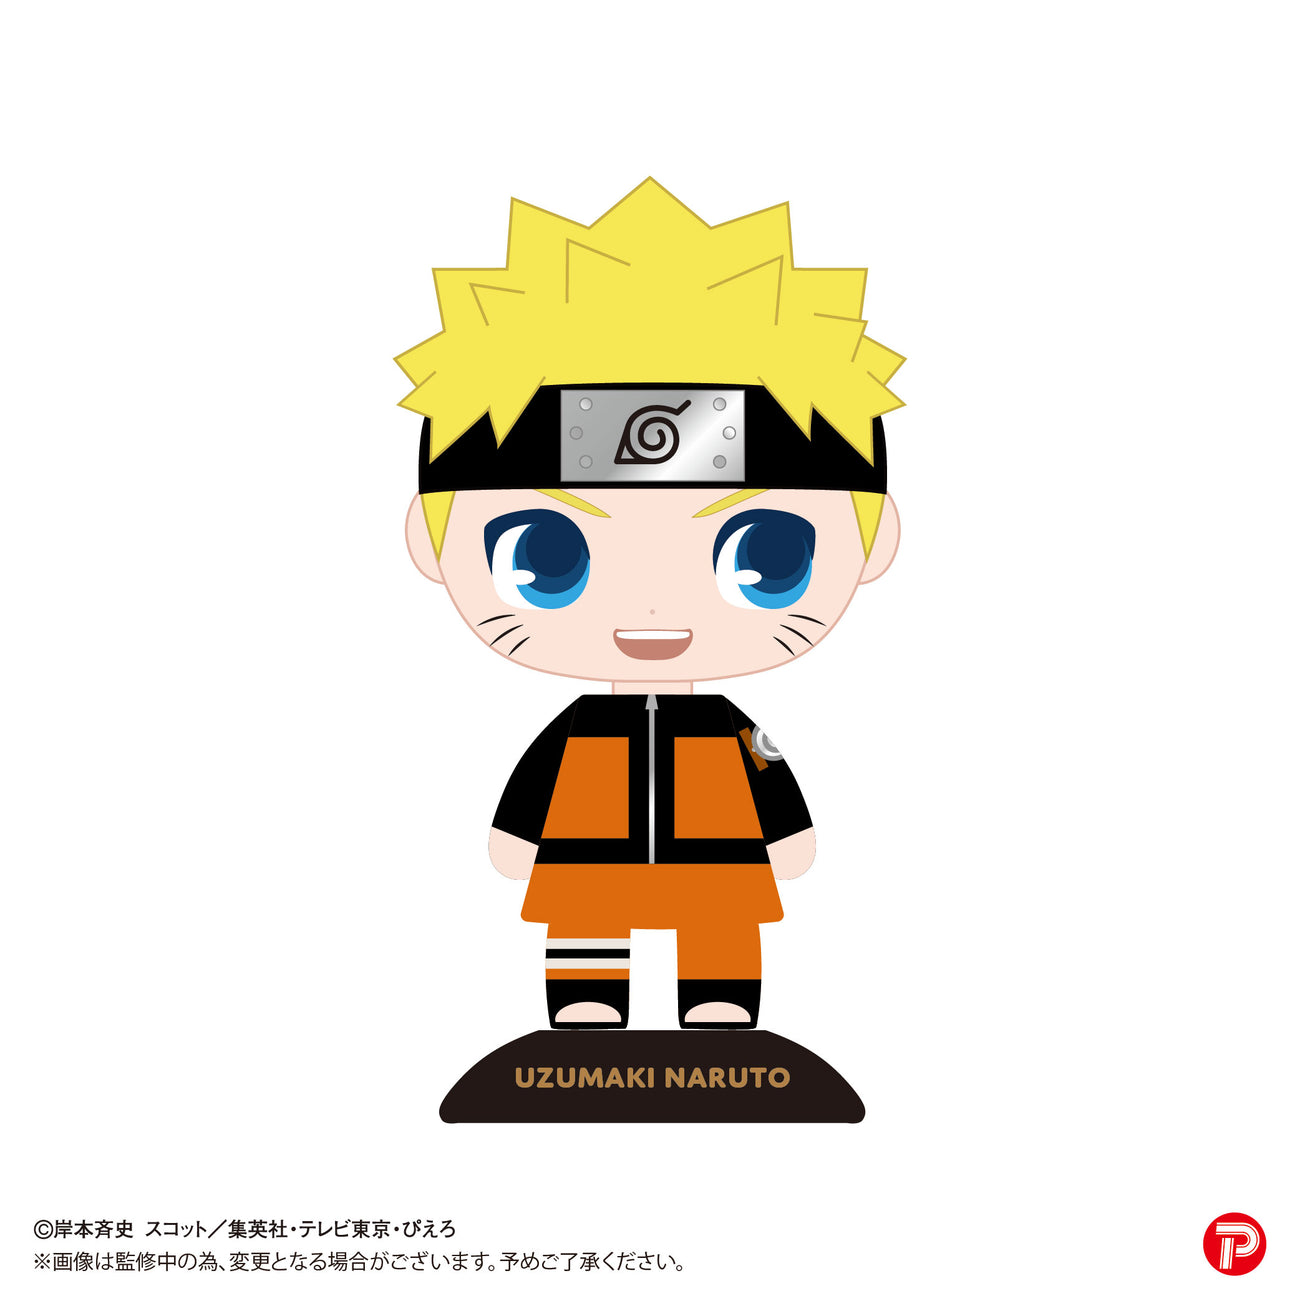 Naruto Uzumaki on Instagram: “describe Minato using one word